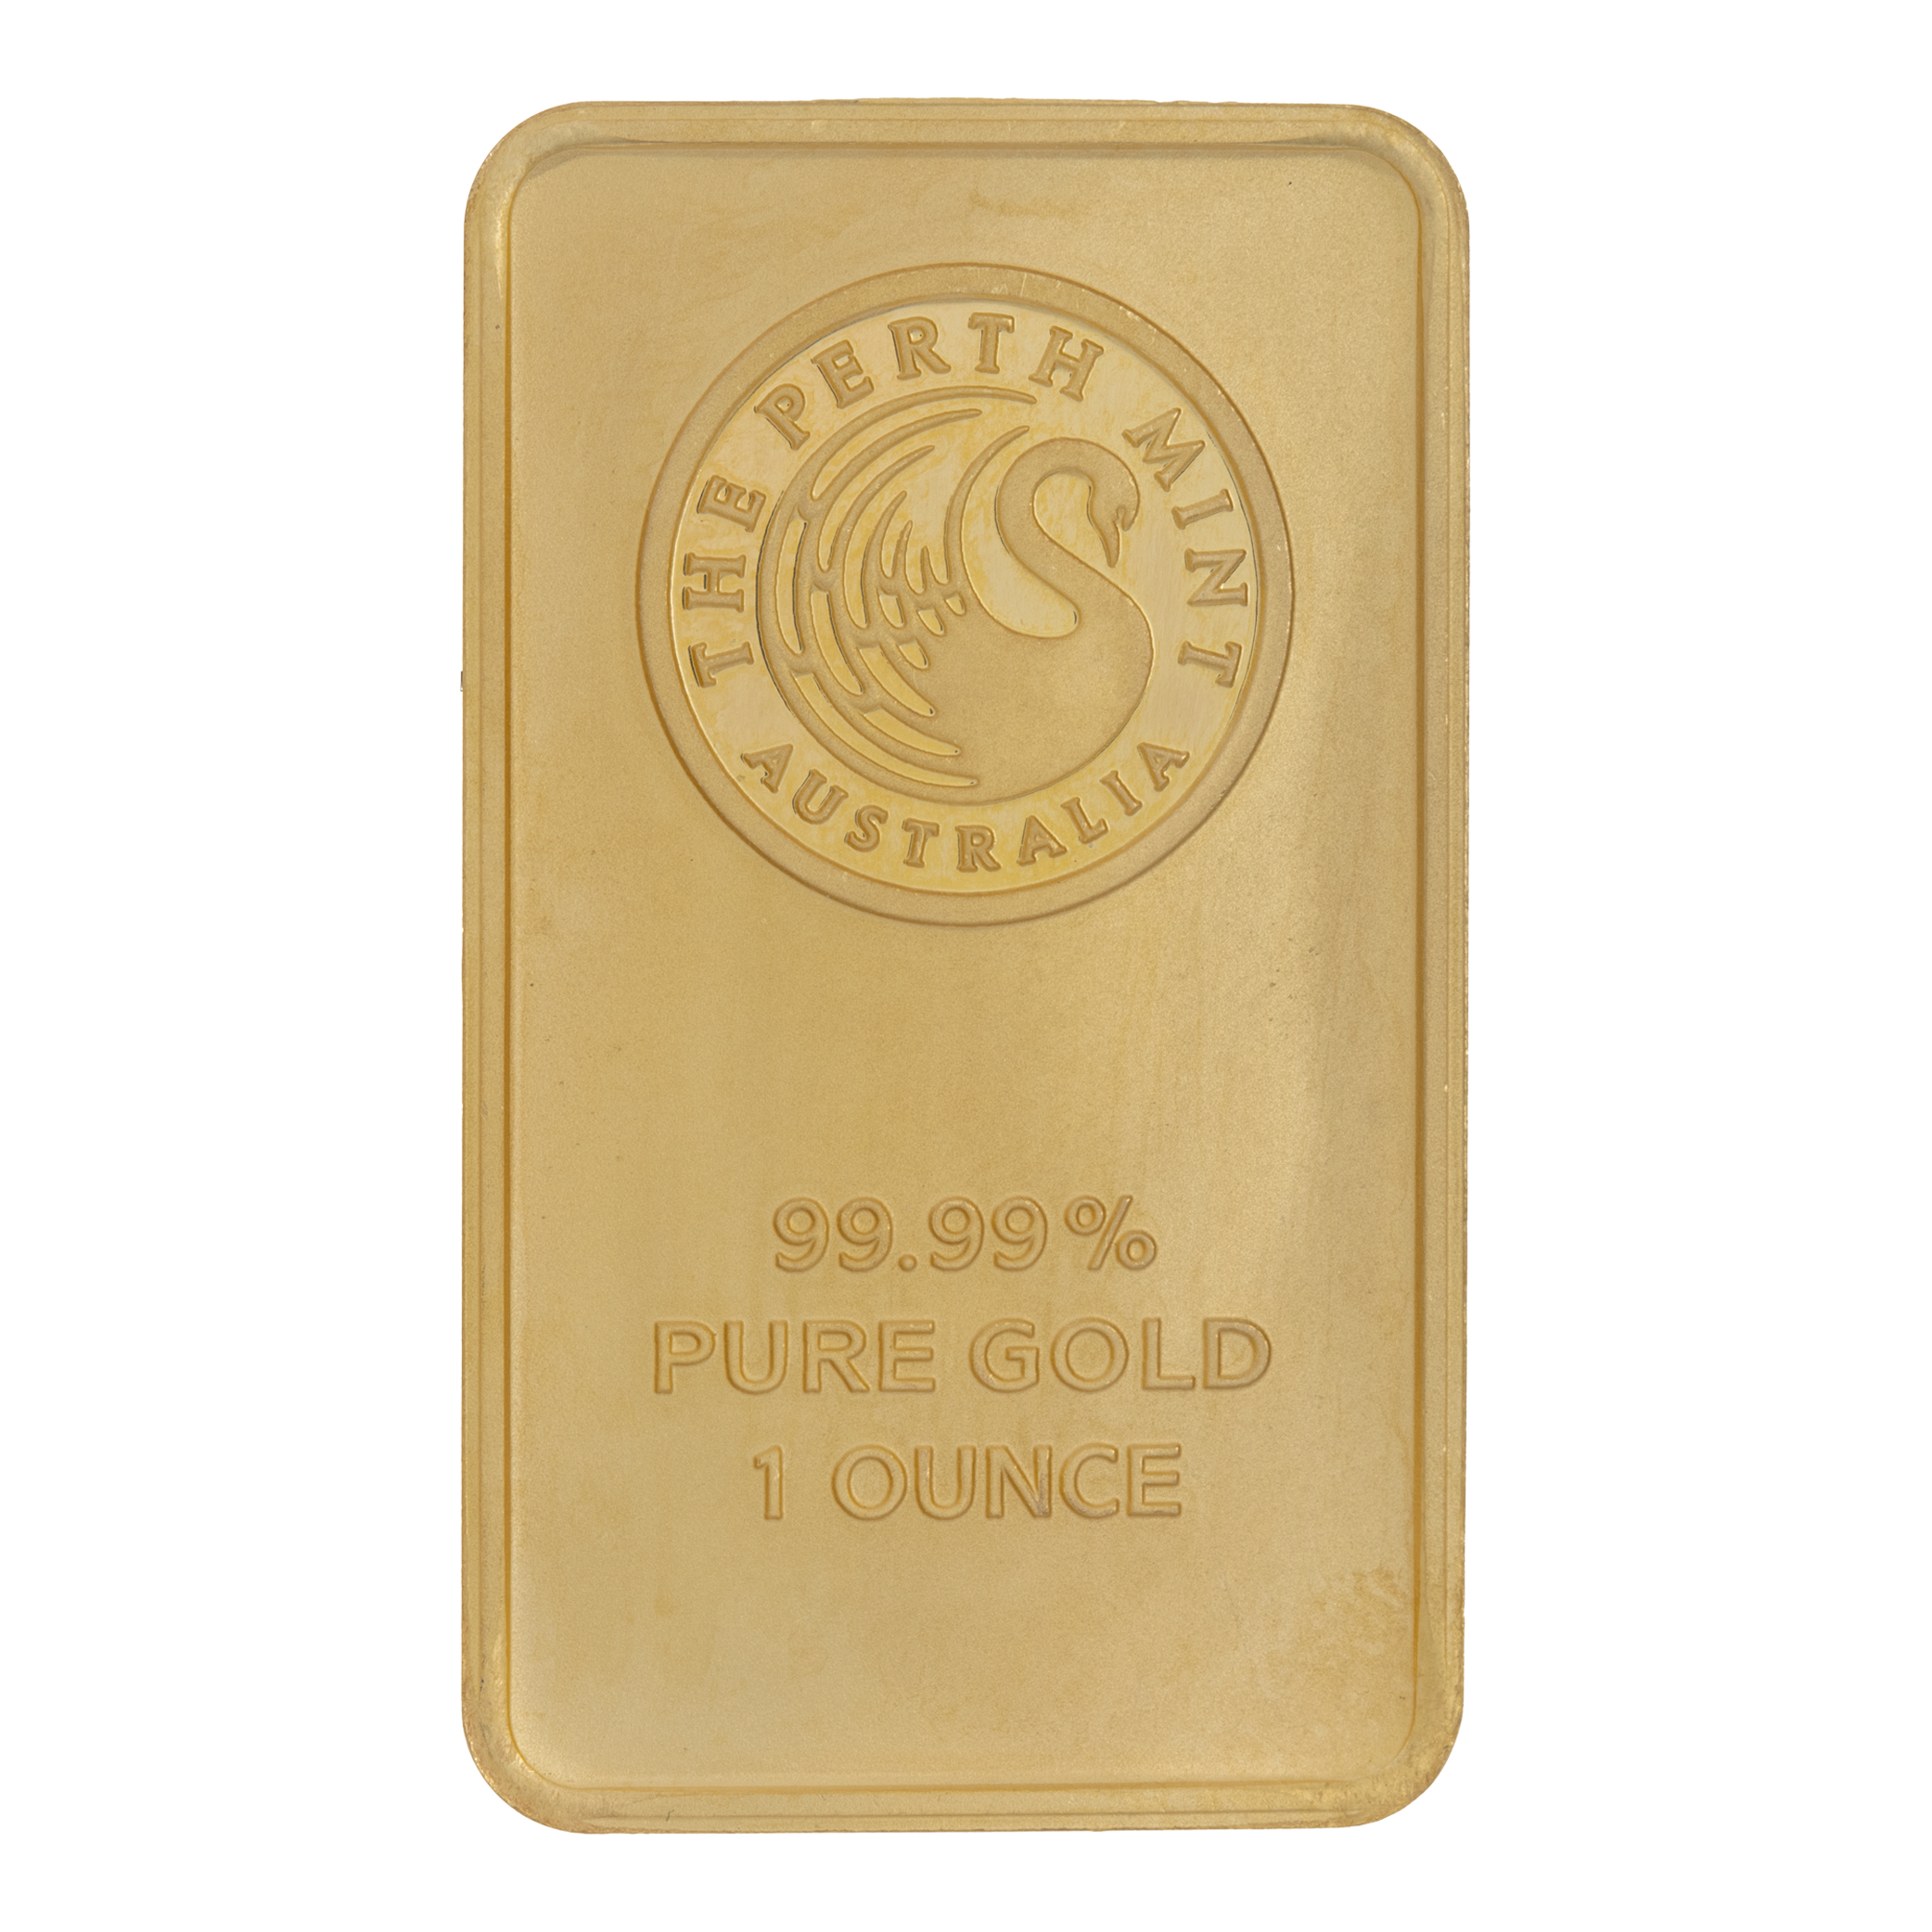 The Perth Mint Australia .999 fine gold bar